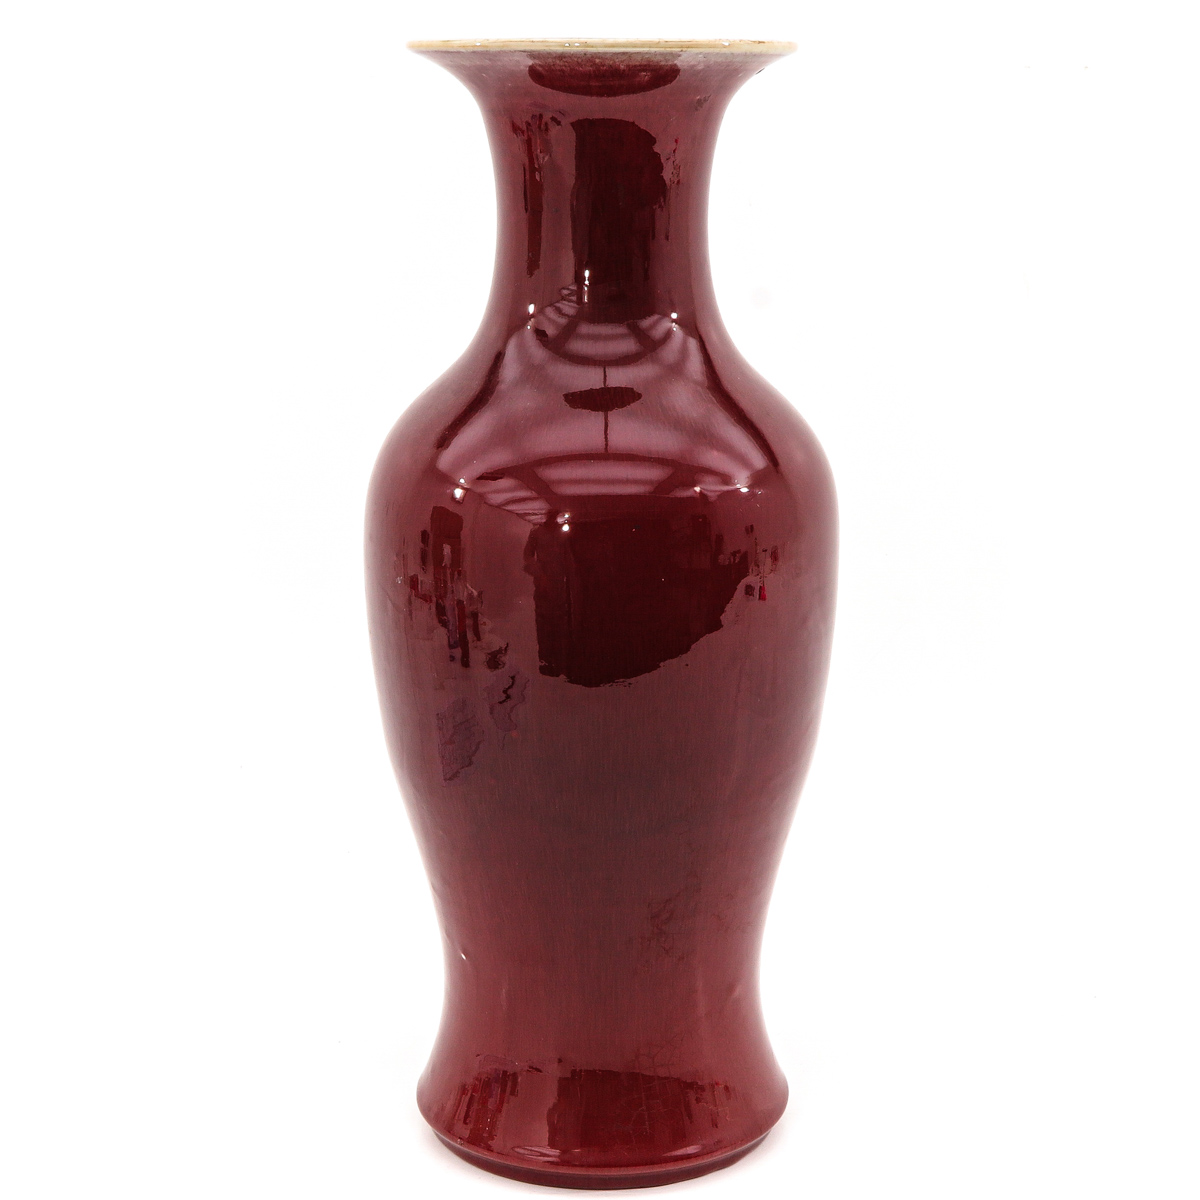 A Large Sang de Boeuf Vase - Image 3 of 8